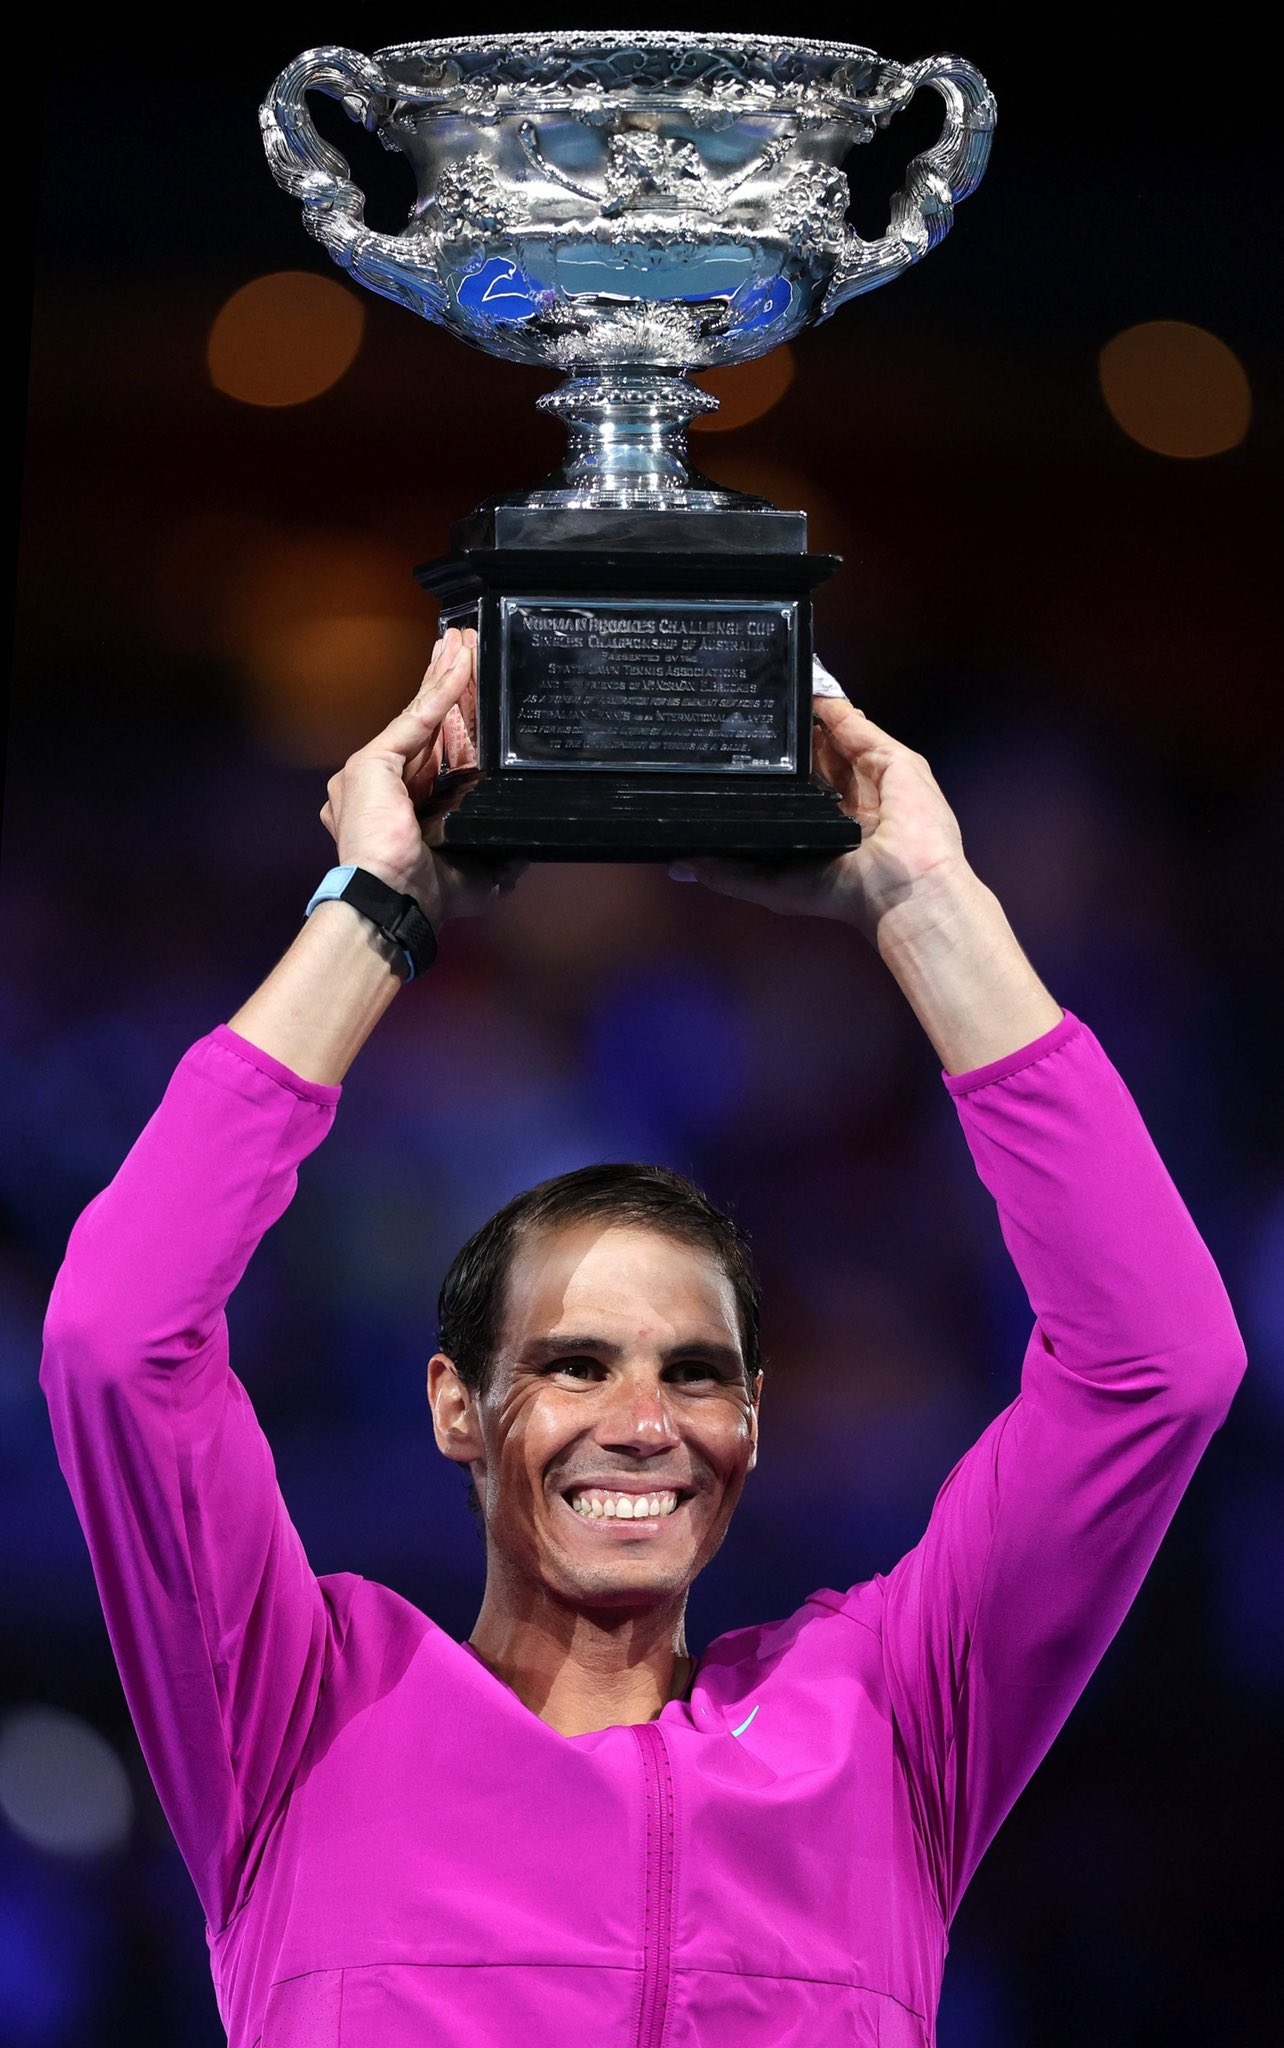 Australian Open 2022 winner Nadal